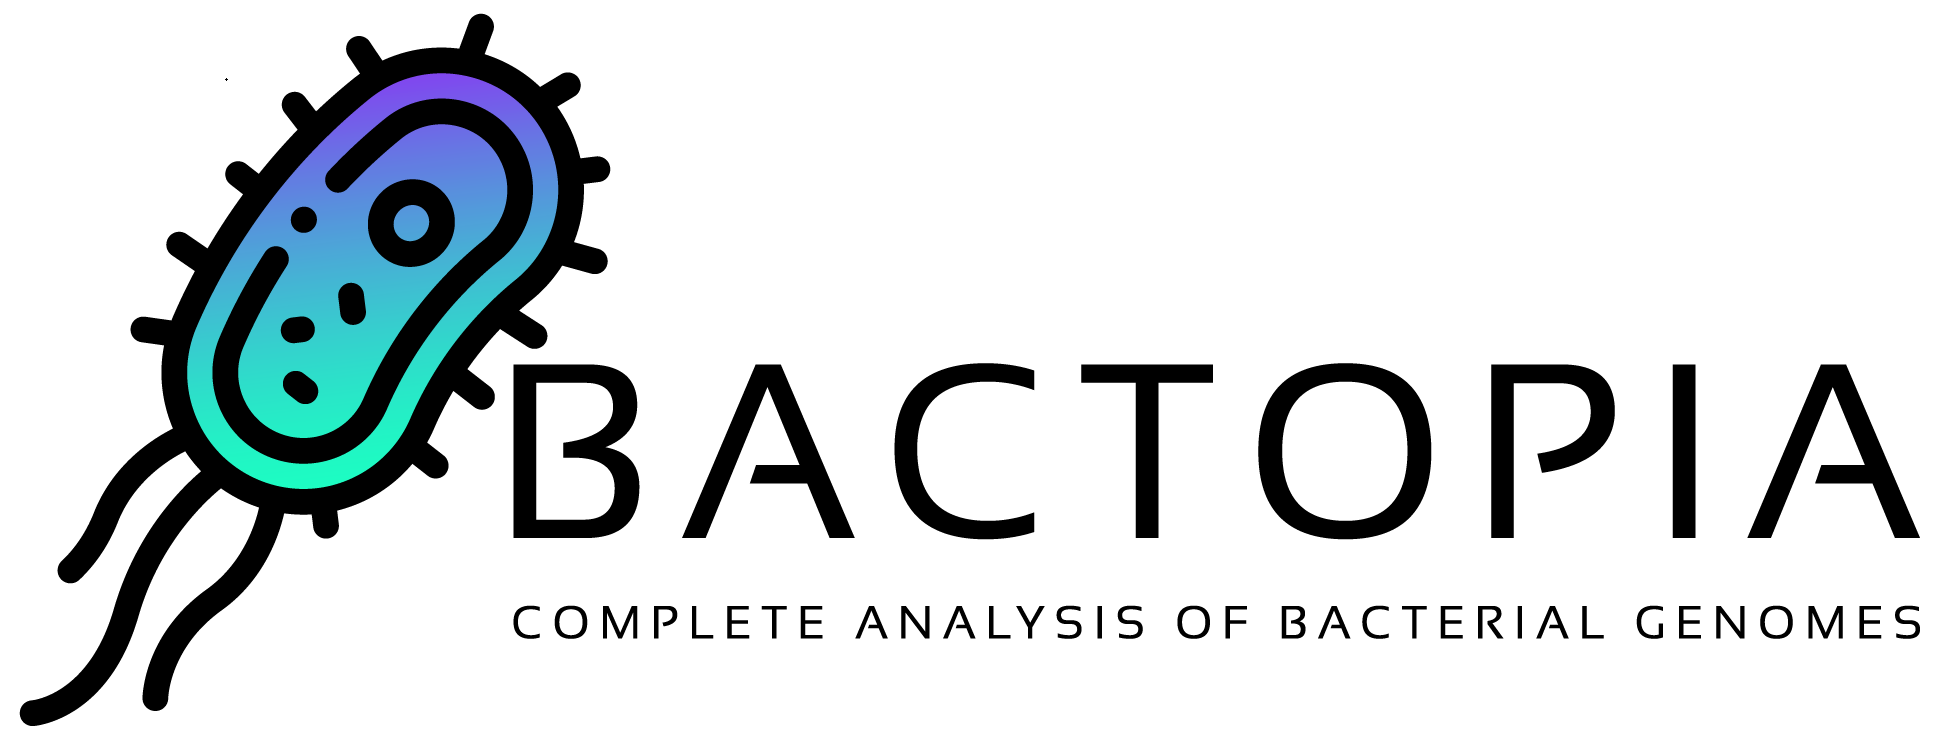 bactopia-logo.png